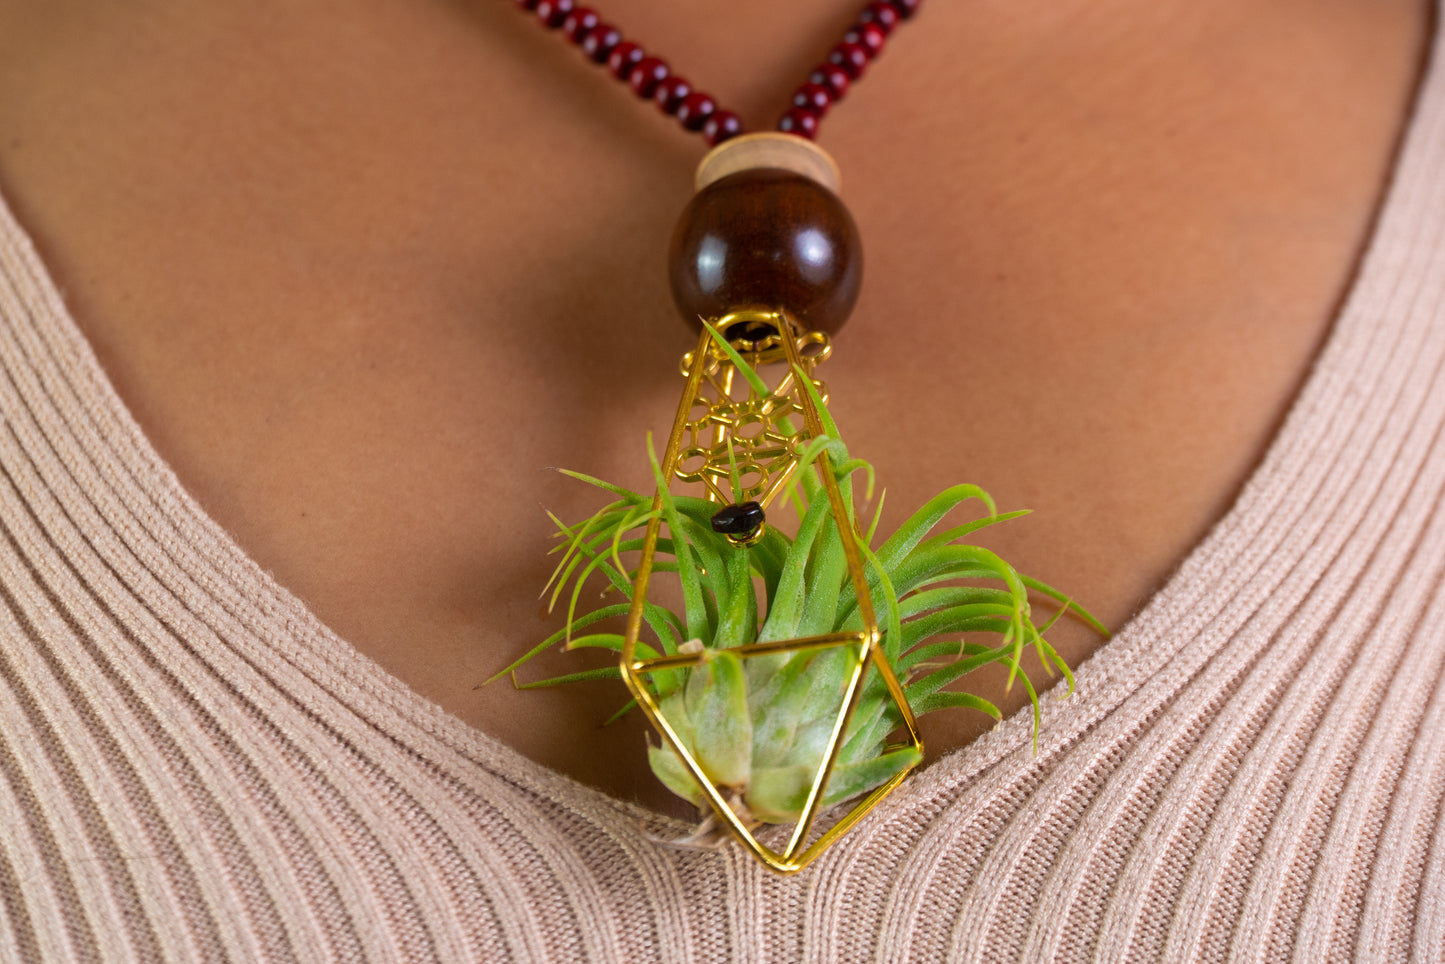 Air Plant Terrarium Sandalwood Bead Necklace ~ Buddha Monk Prayer Beads